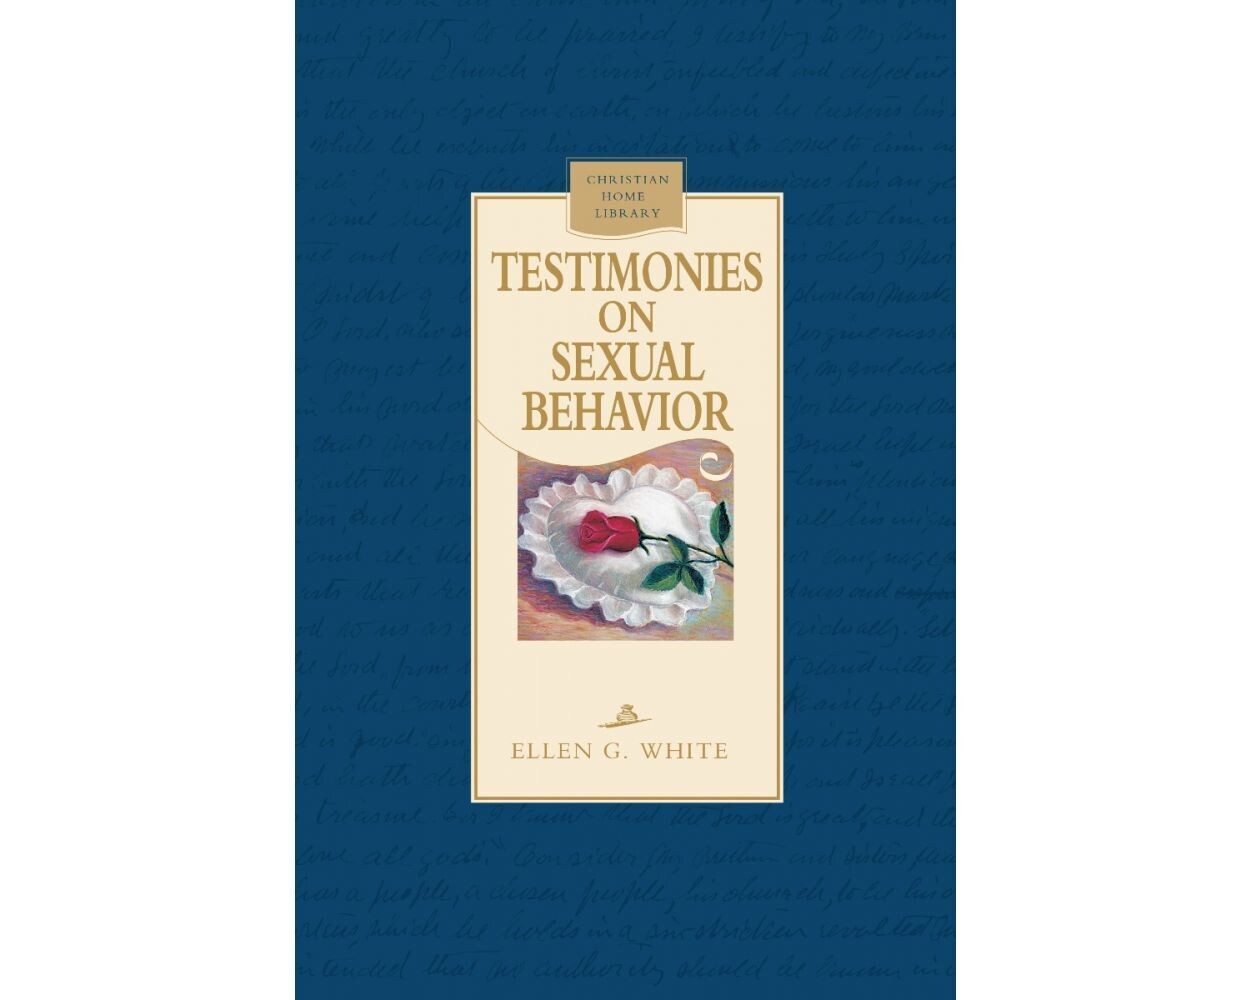 Testimonies on Sexual Behavior Hardback Blue - EGW (D1)